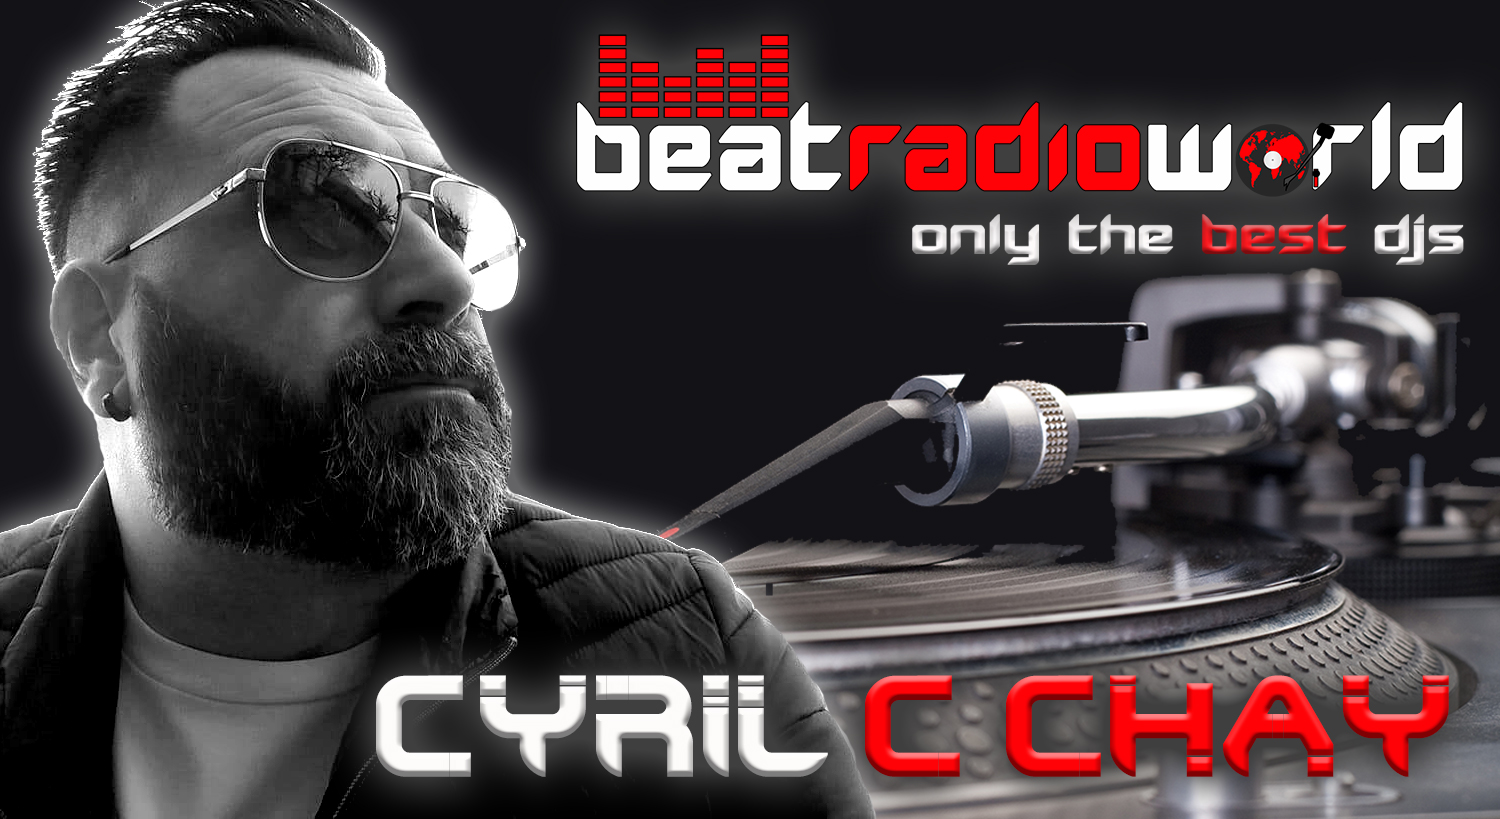 Cyril-C-Chay